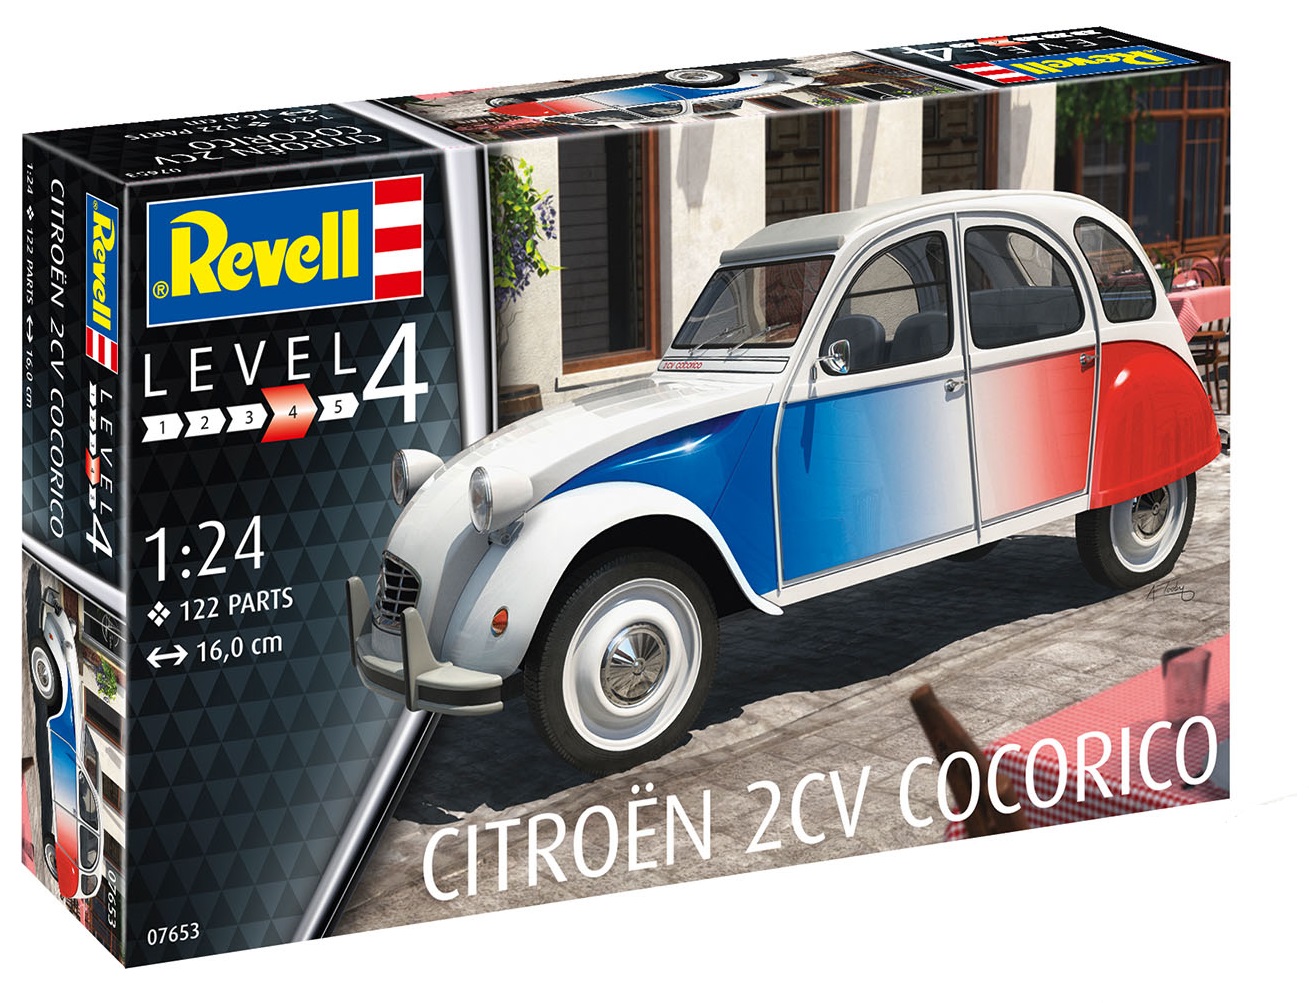     Citroën 2 CV Cocorico,  1:24, Revell 07653. # 1 hobbyplus.ru